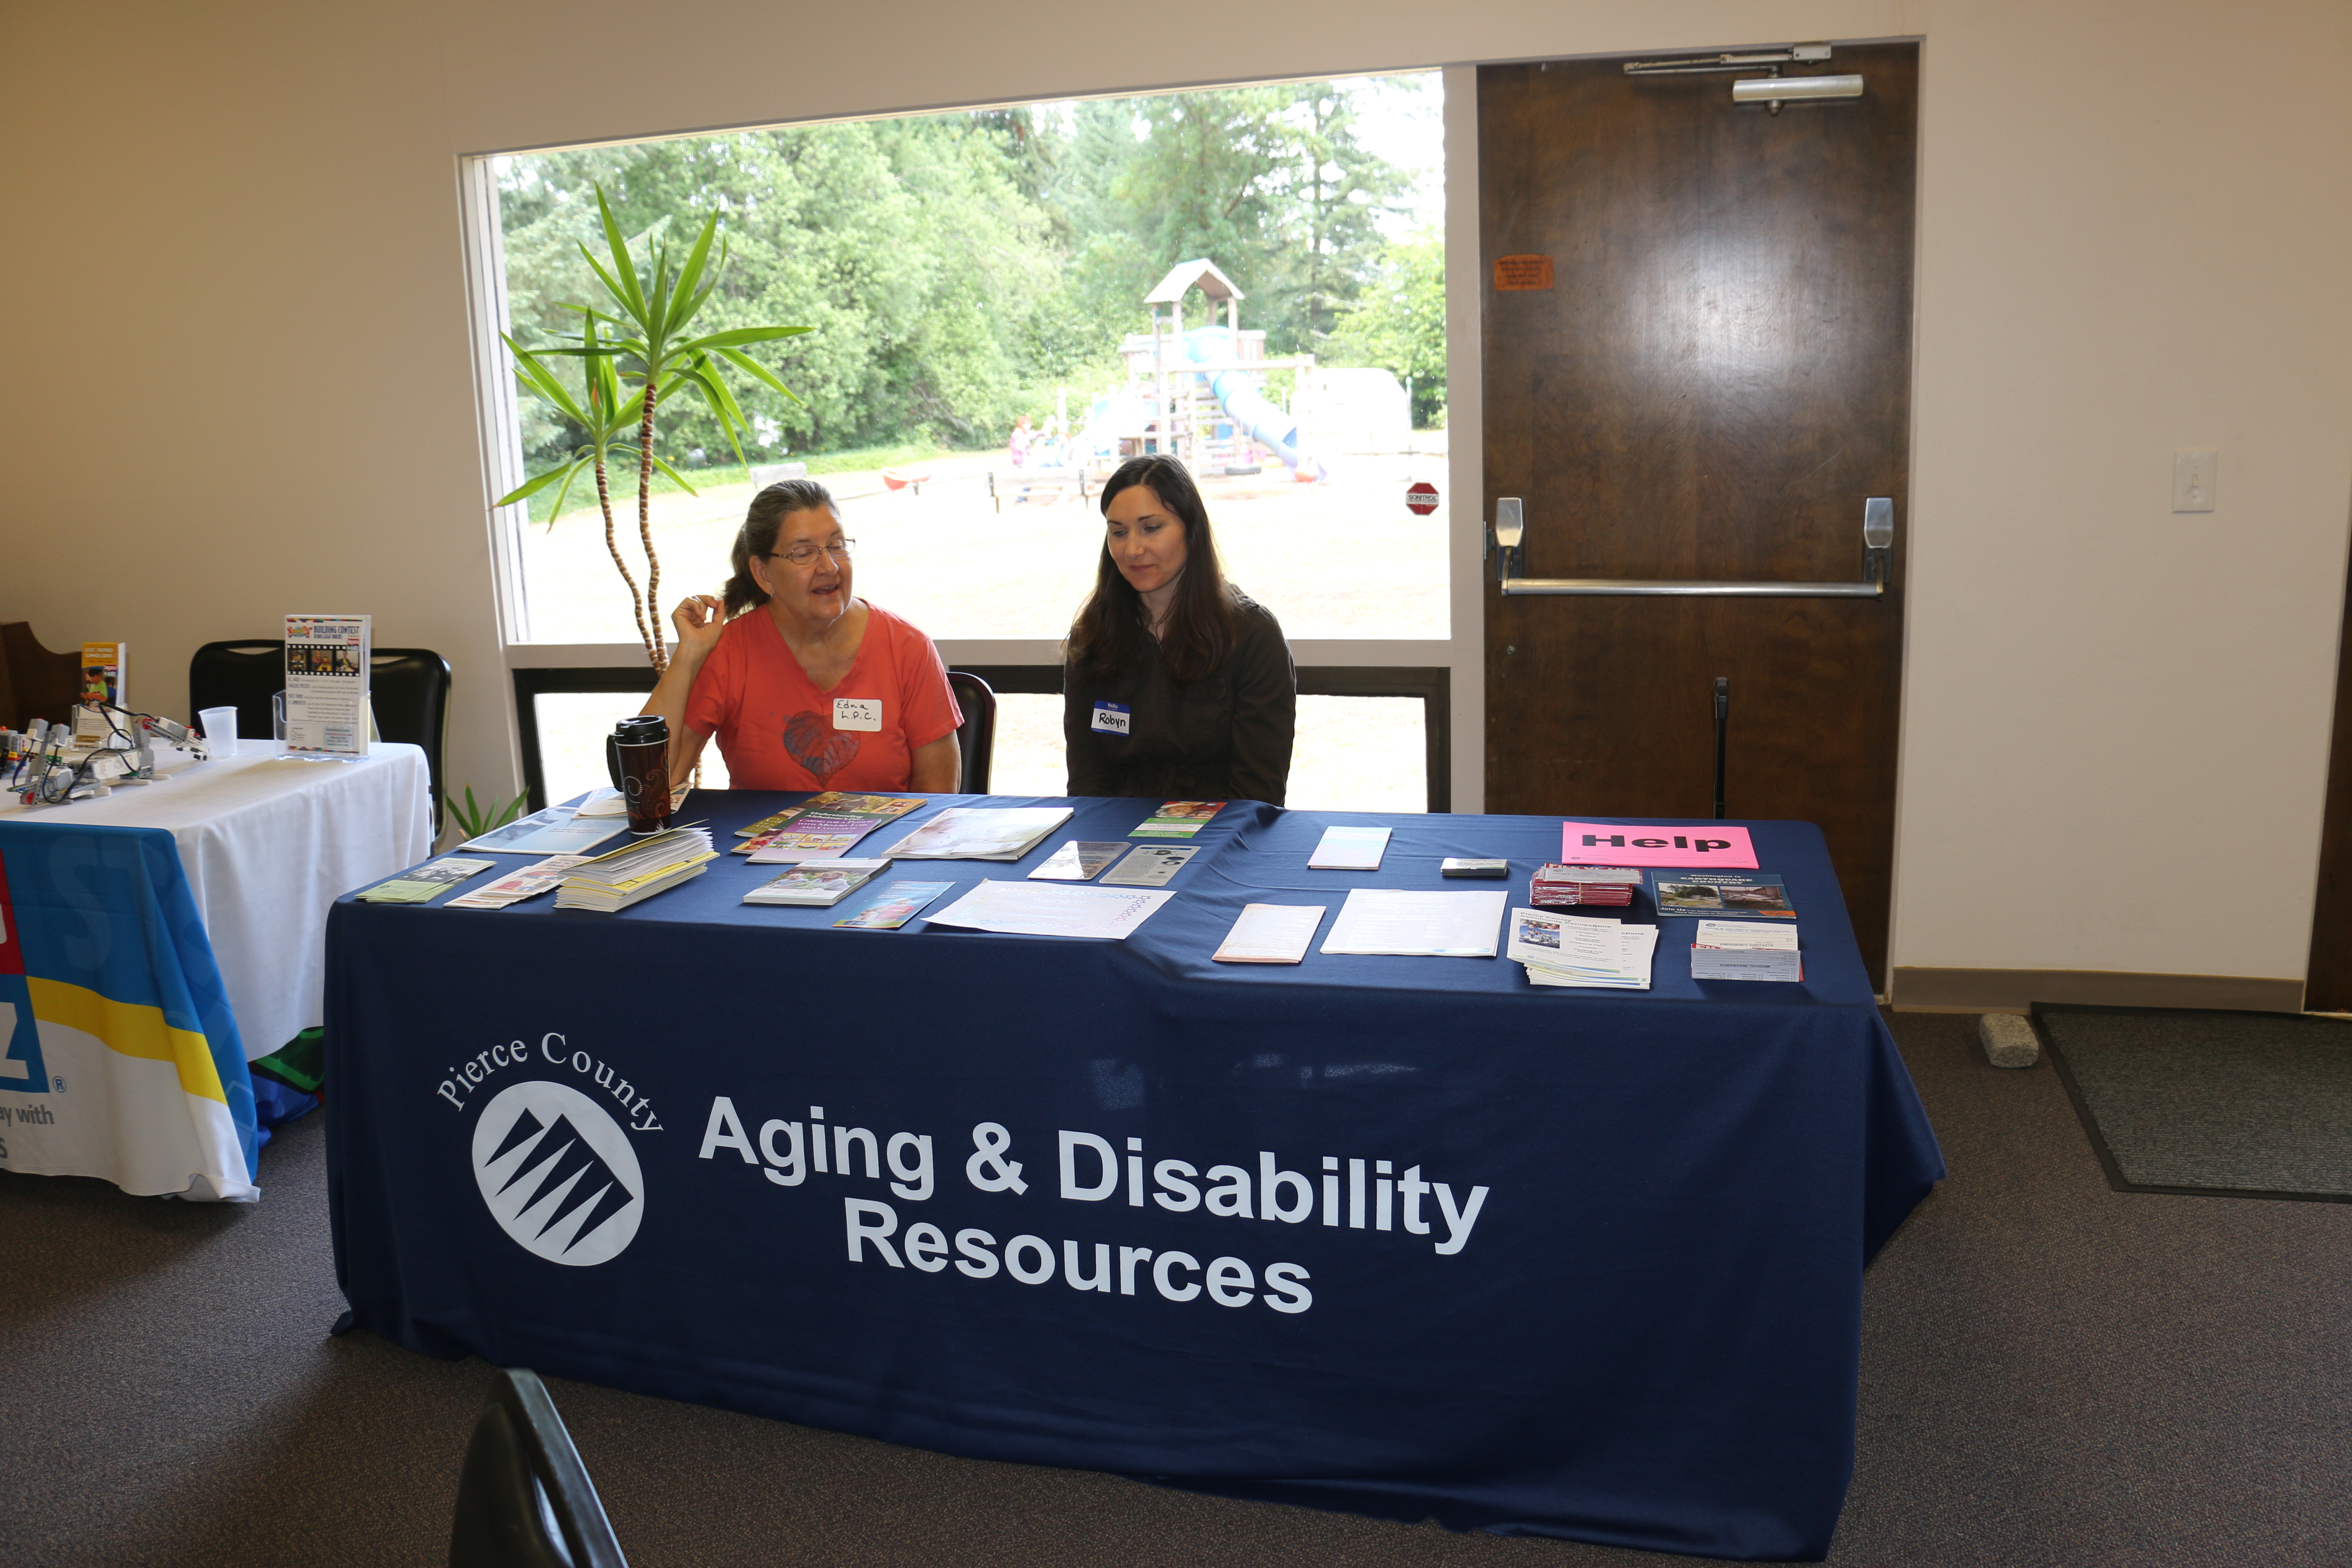 Senior & Disability Resources